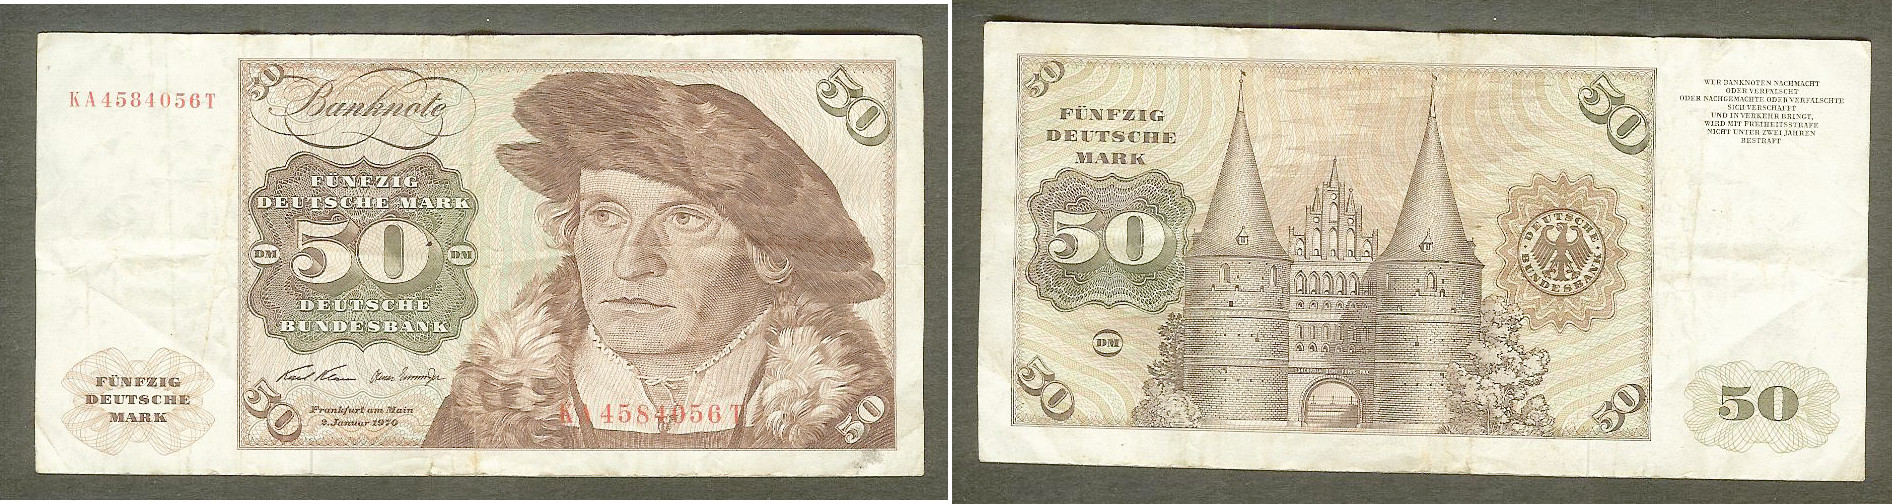 Germany 50 marks 1970 gF